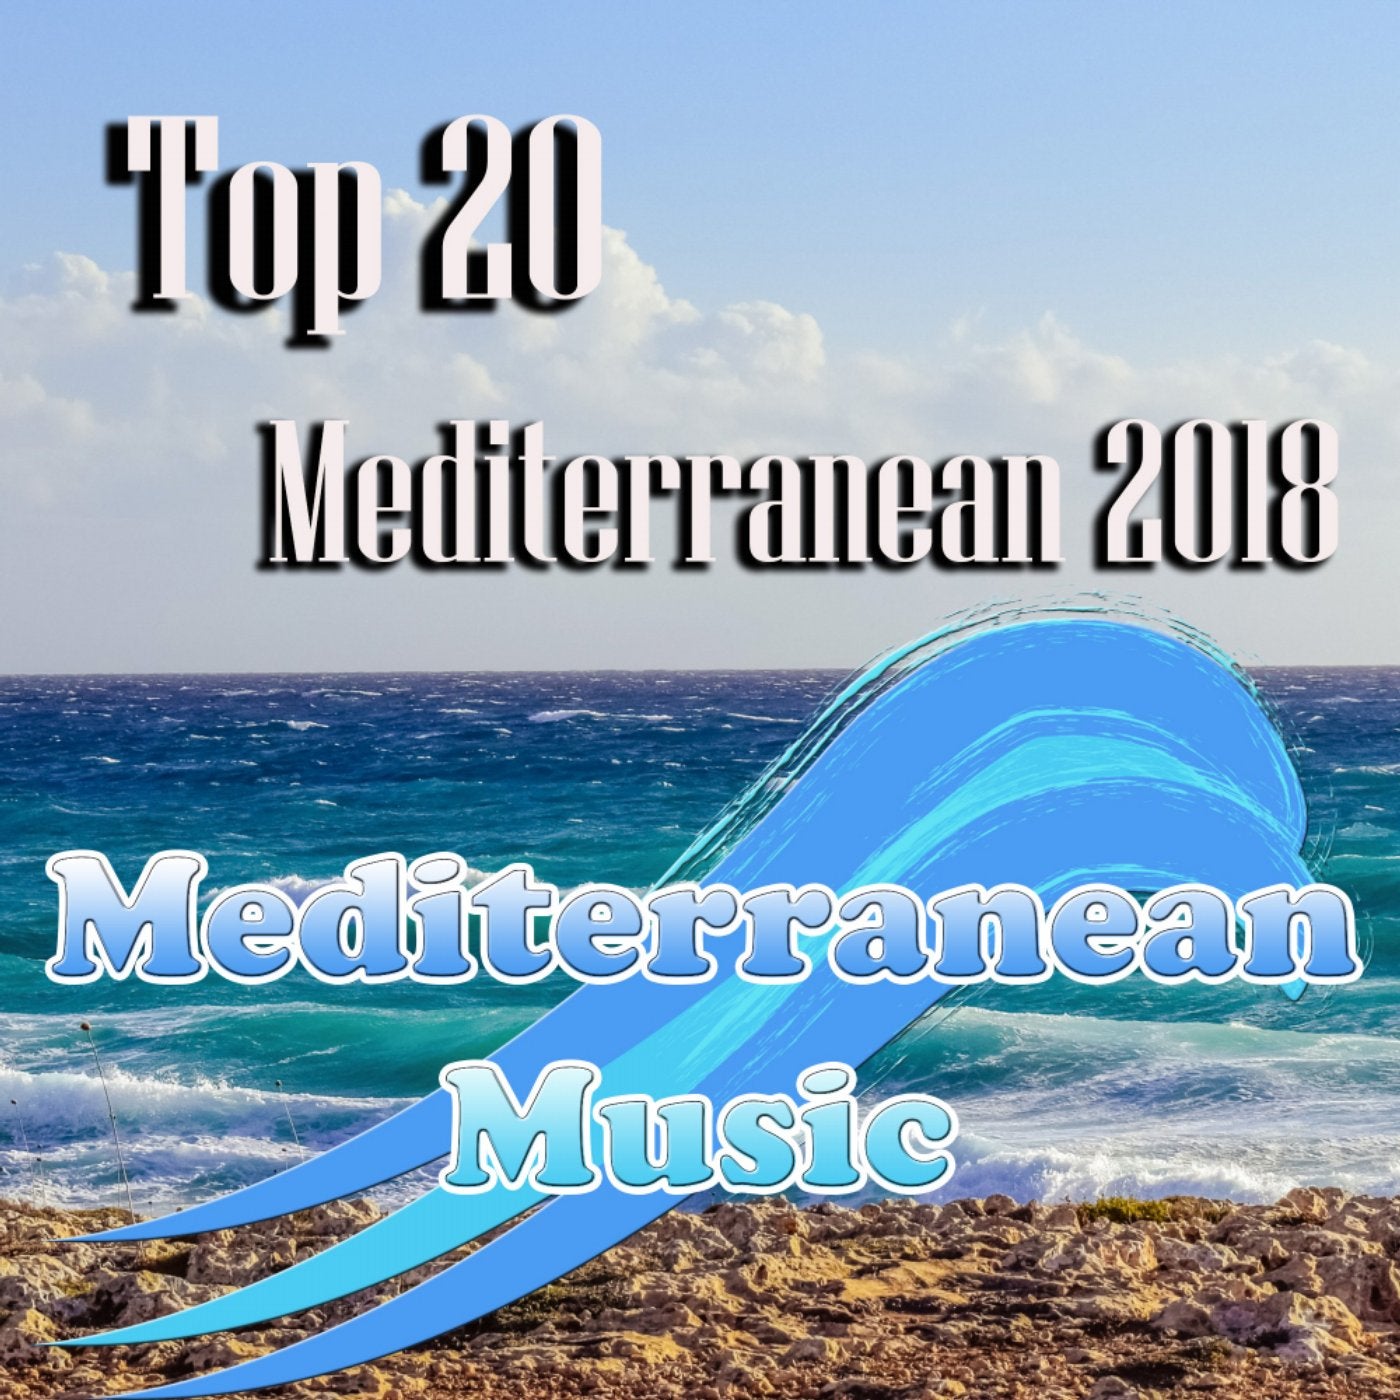 Top 20 Mediterranean 2018